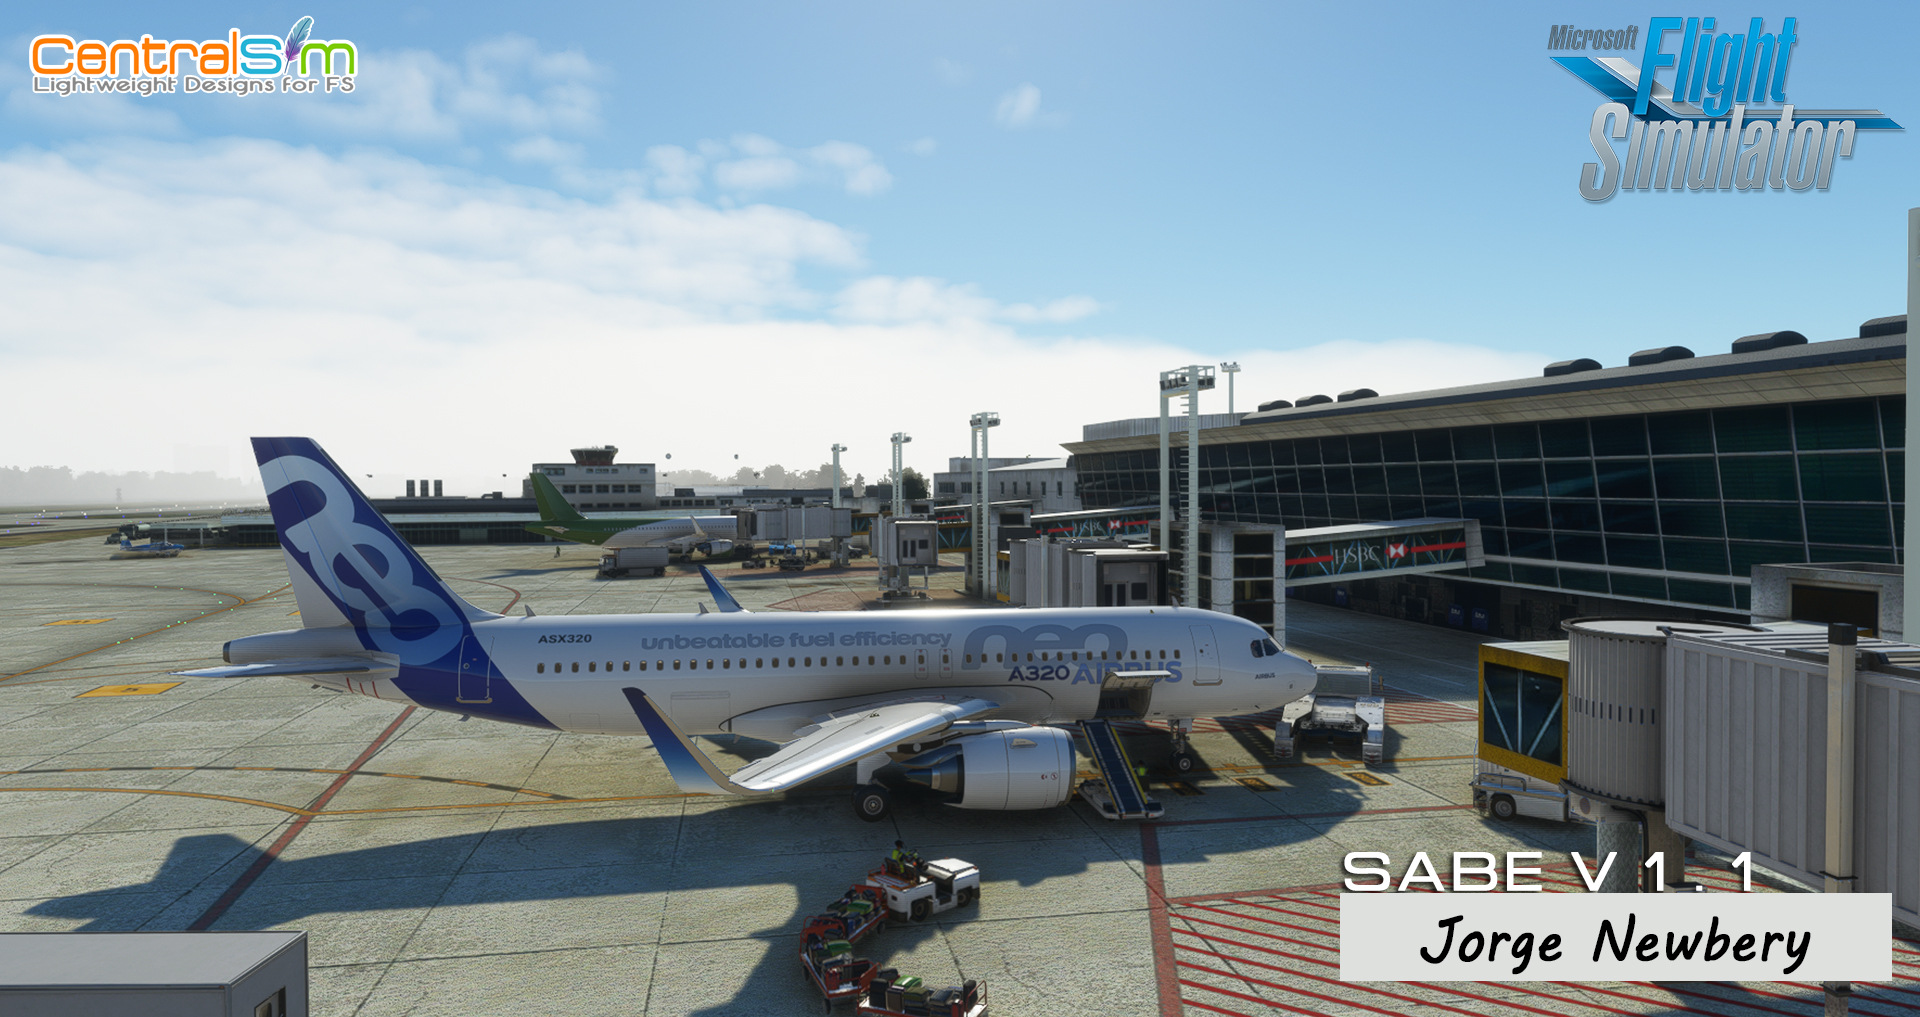 CentralSim Releases Jorge Newbery Airport v1.1 for MSFS - CentralSim, Microsoft Flight Simulator